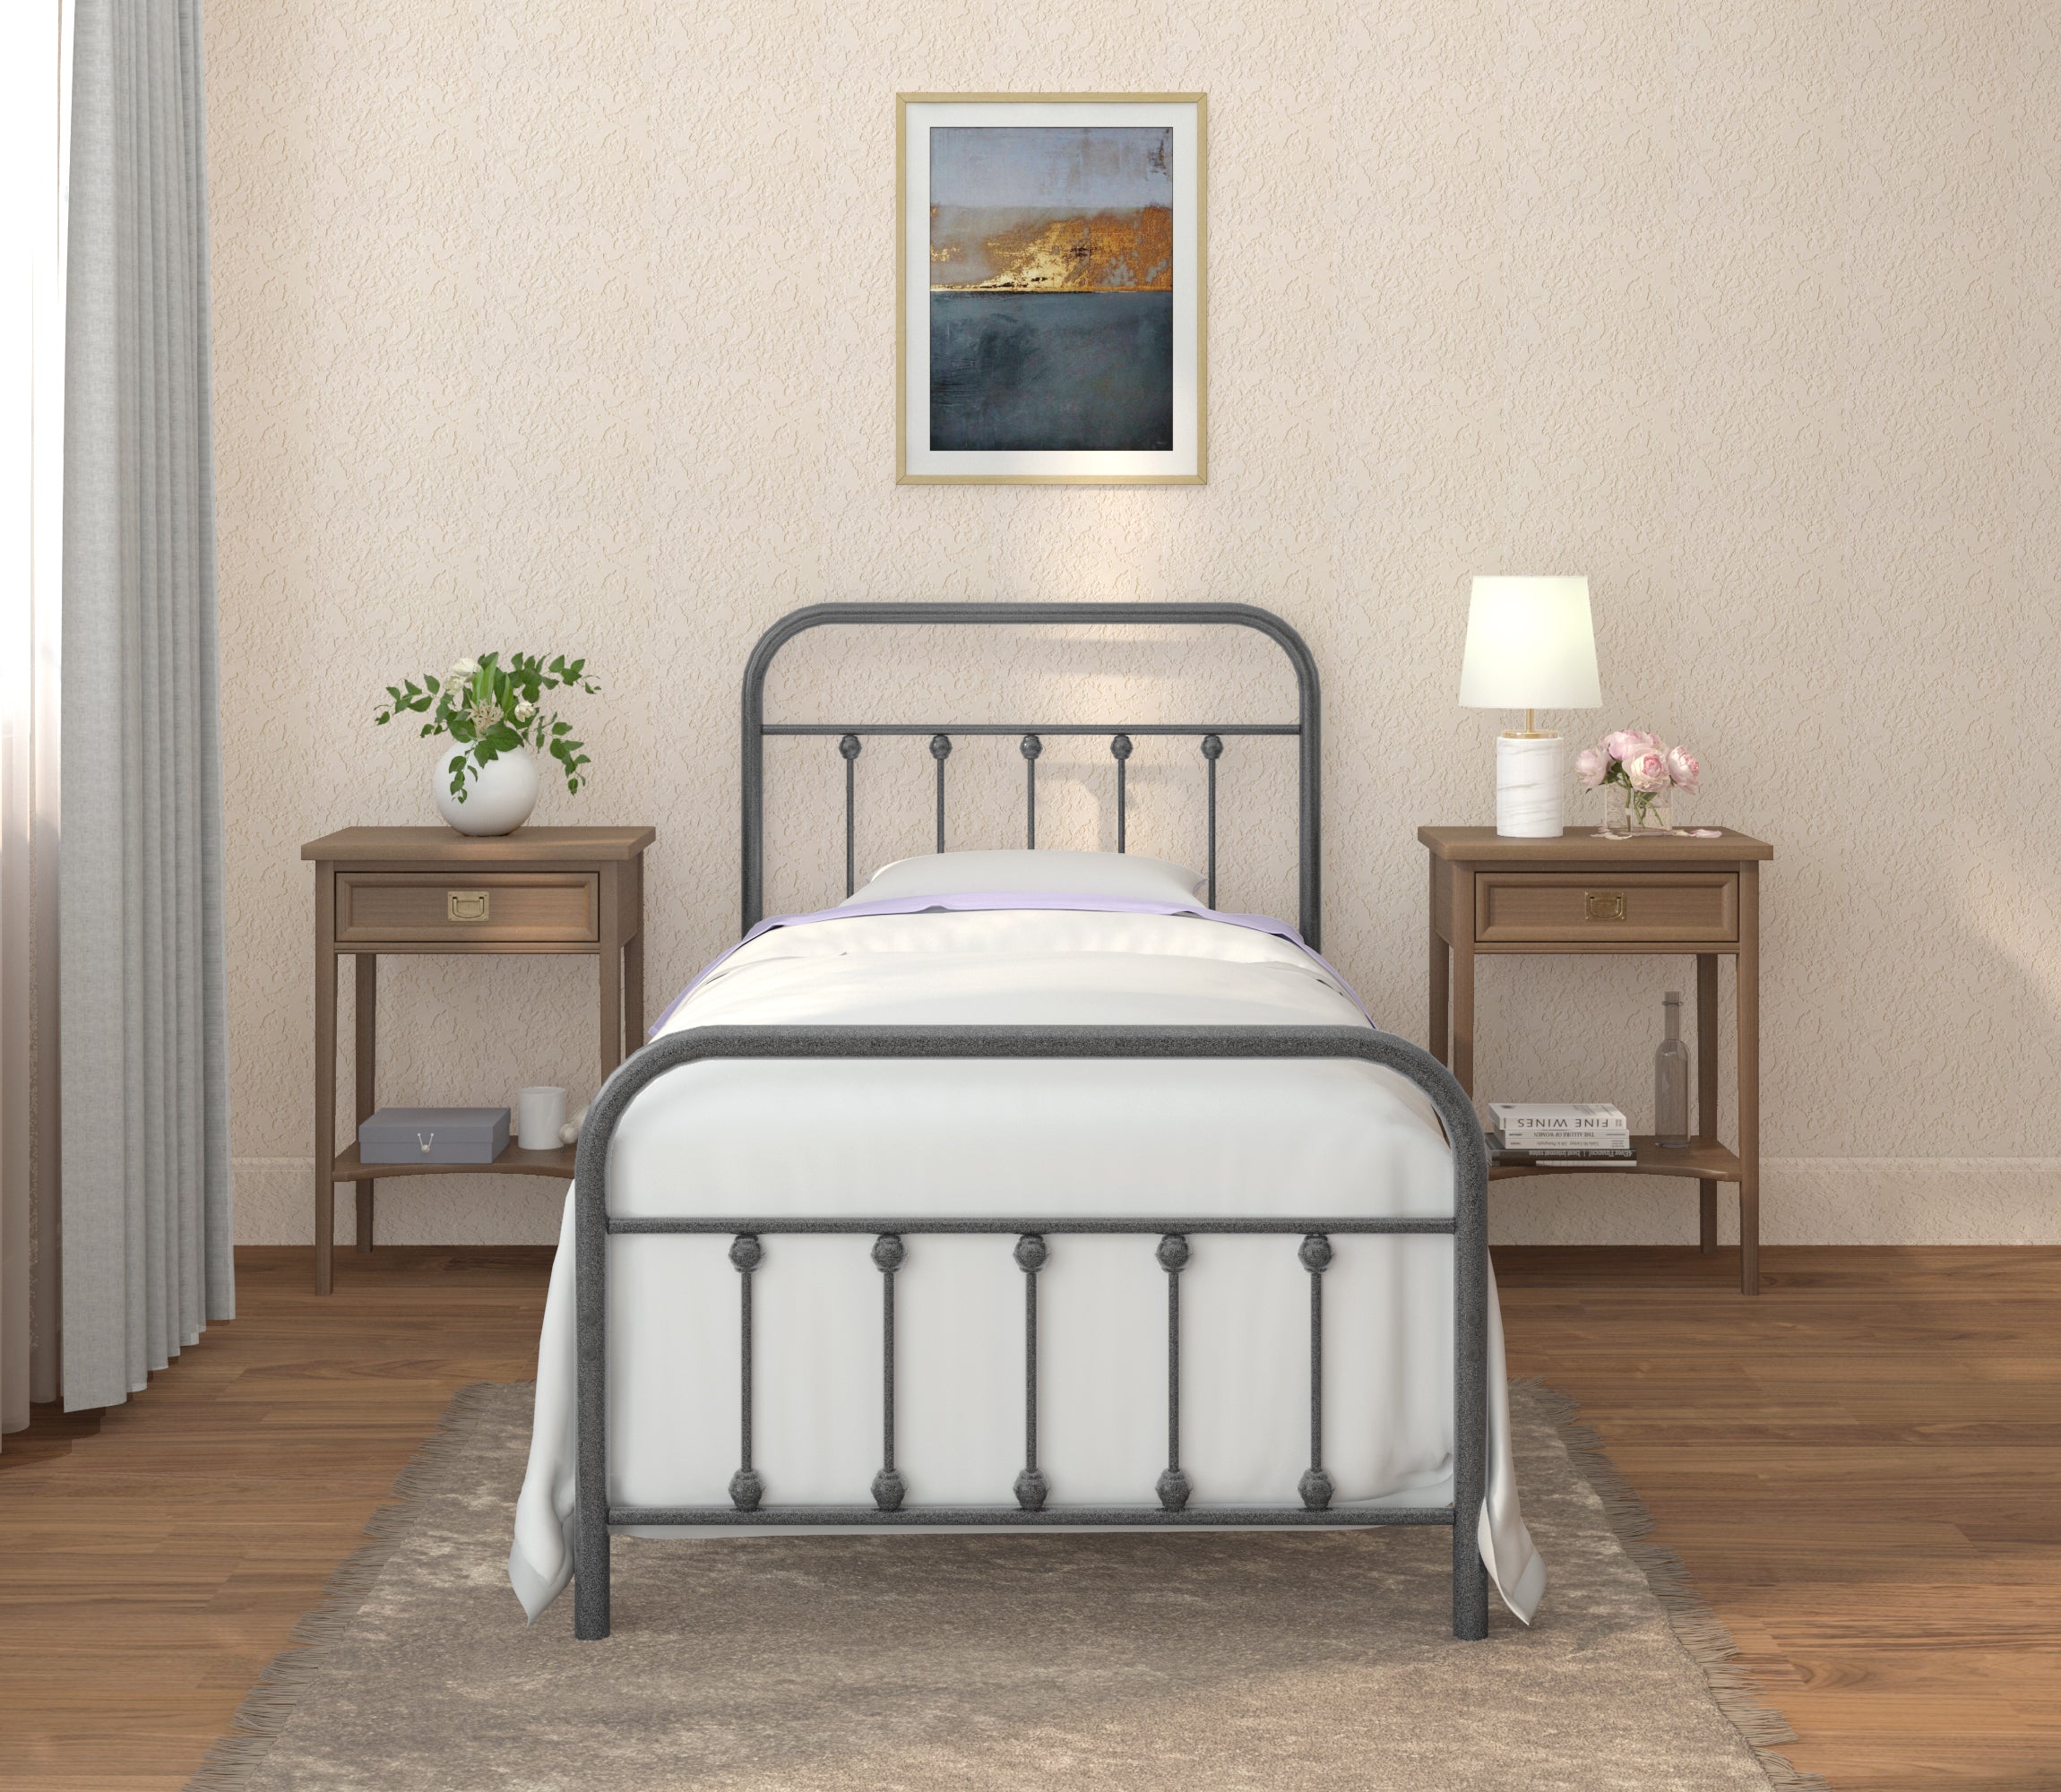 Vintage Bed Frame - Ambee21